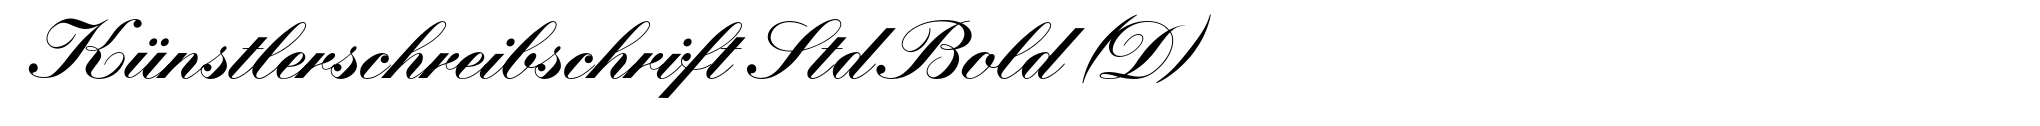 Künstlerschreibschrift Std Bold (D) image